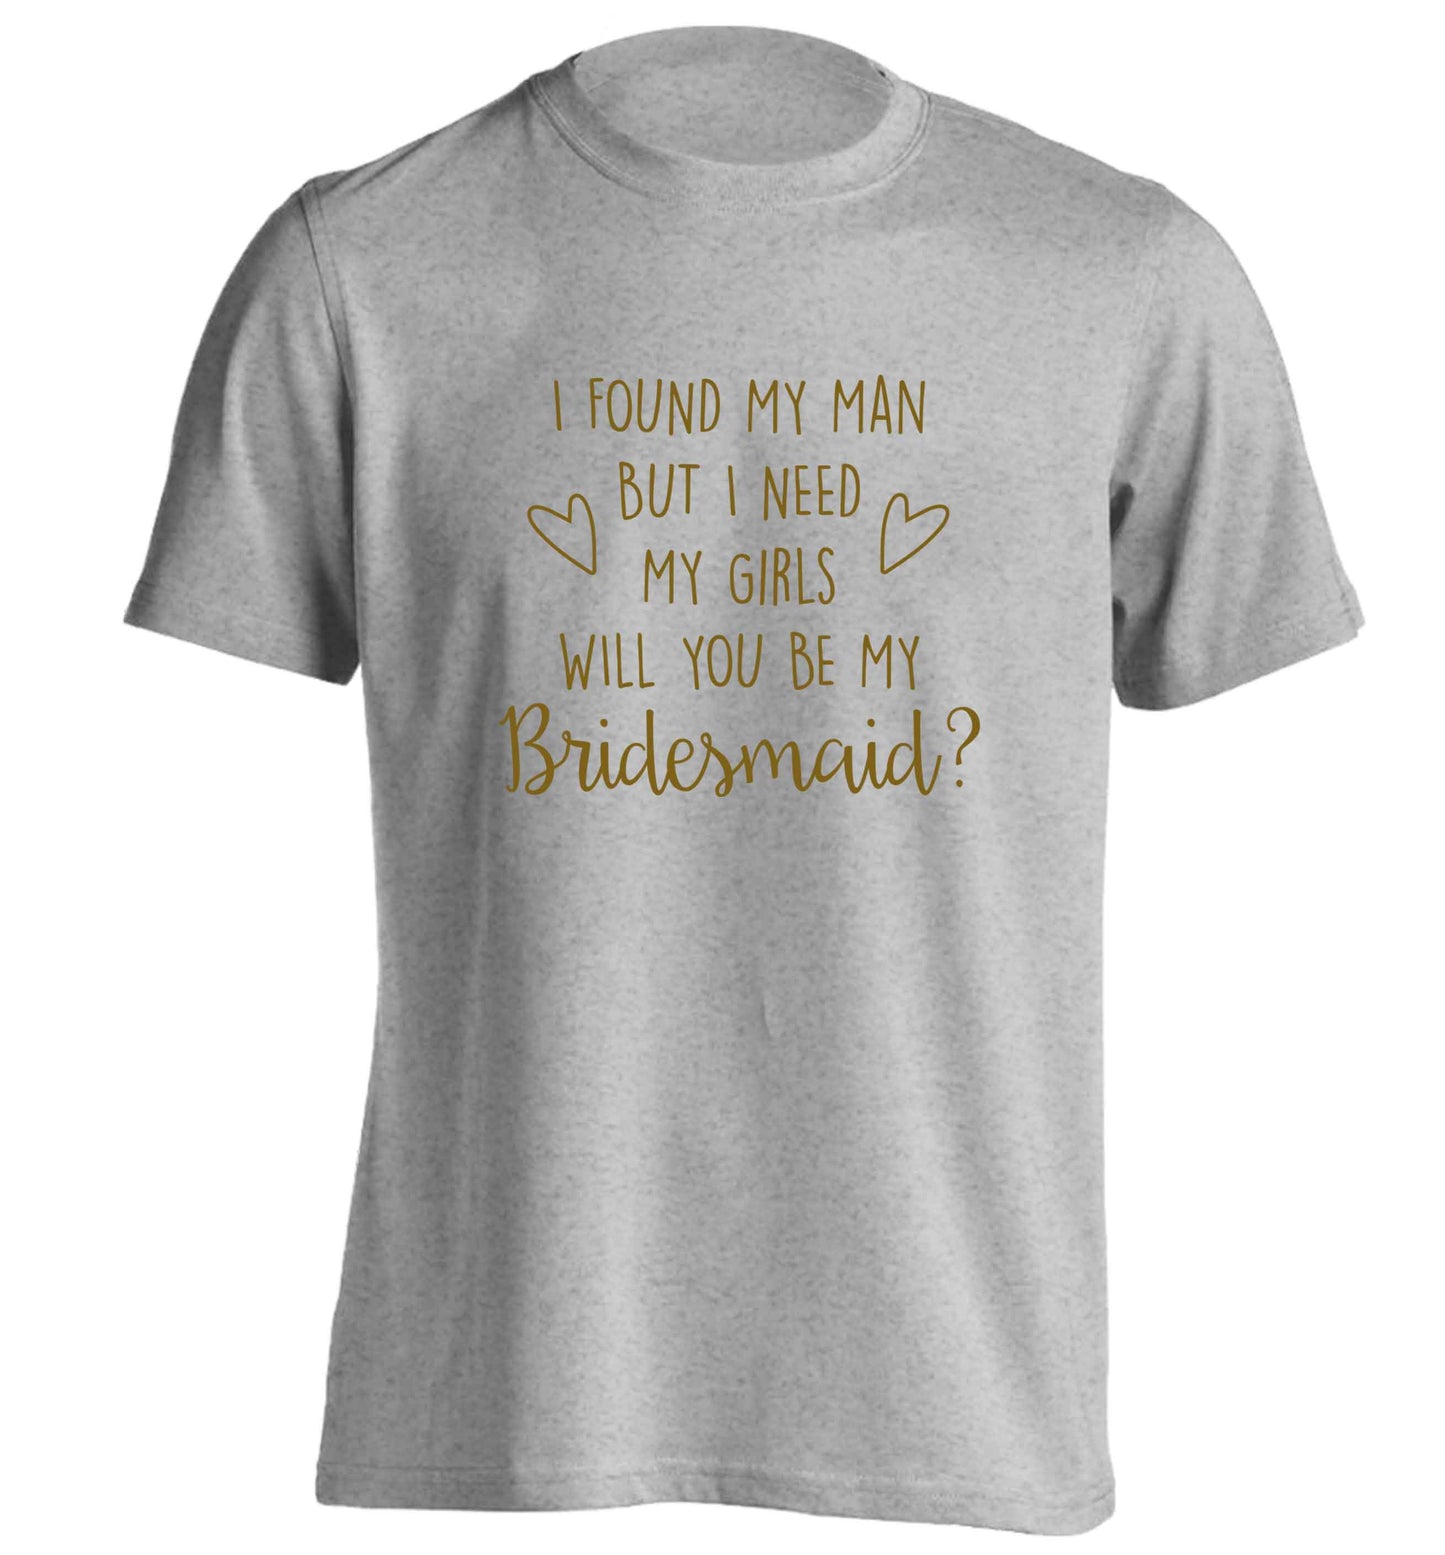 I found my man but I need my girls will you be my bridesmaid? adults unisex grey Tshirt 2XL